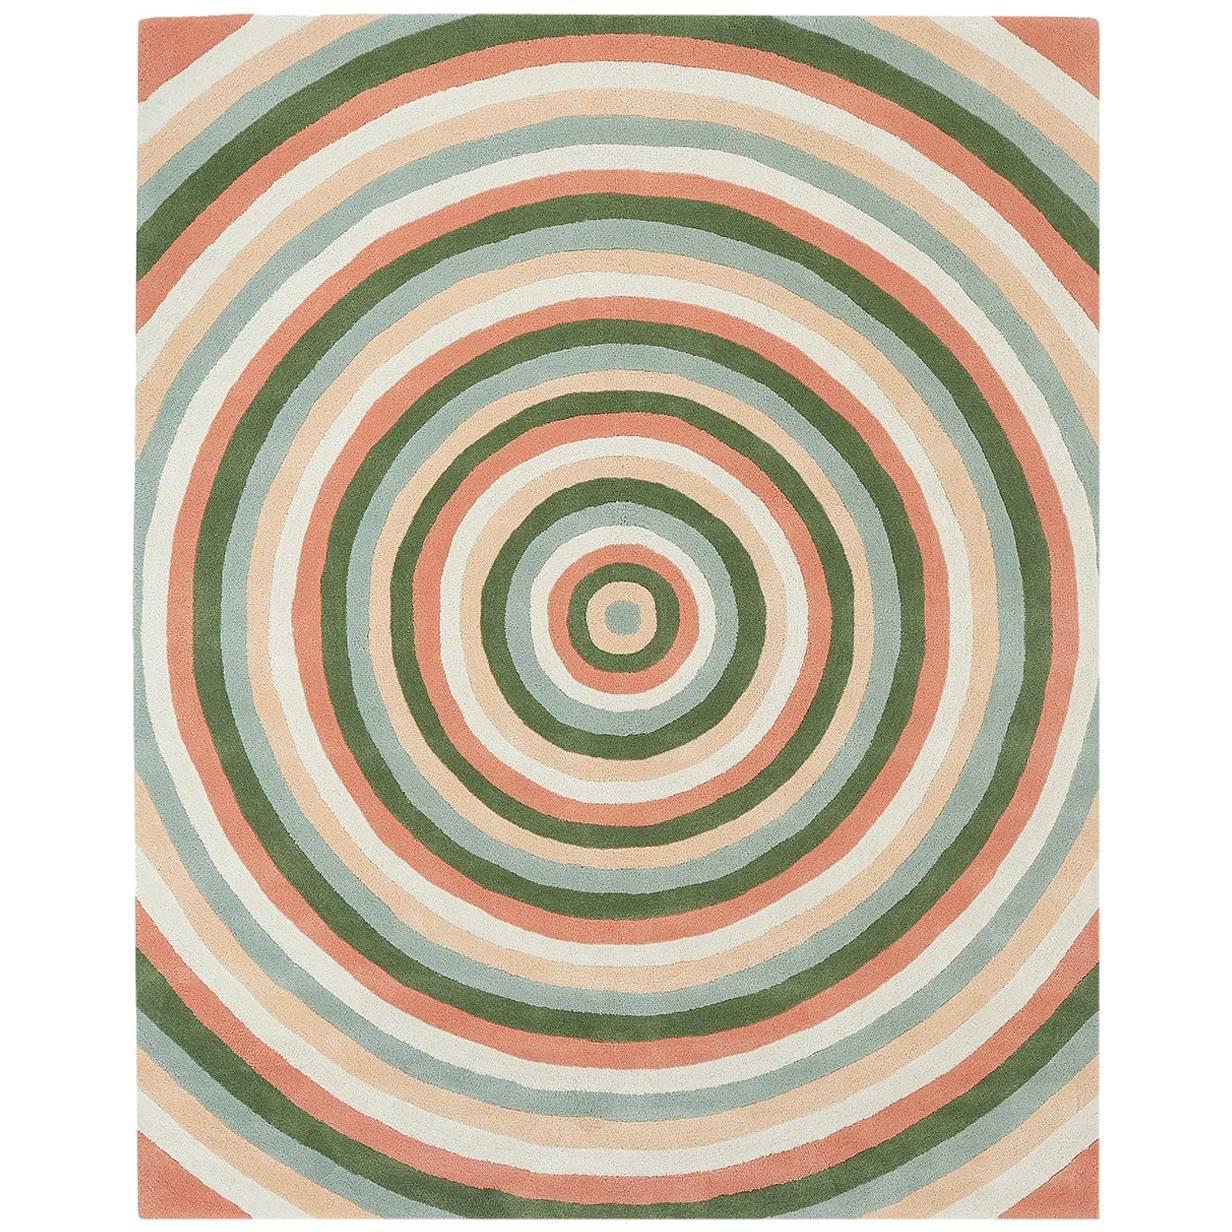 Angela Adams Infinity, Pink Rug, Geometric Circles, Wool, Handcrafted, Modern For Sale